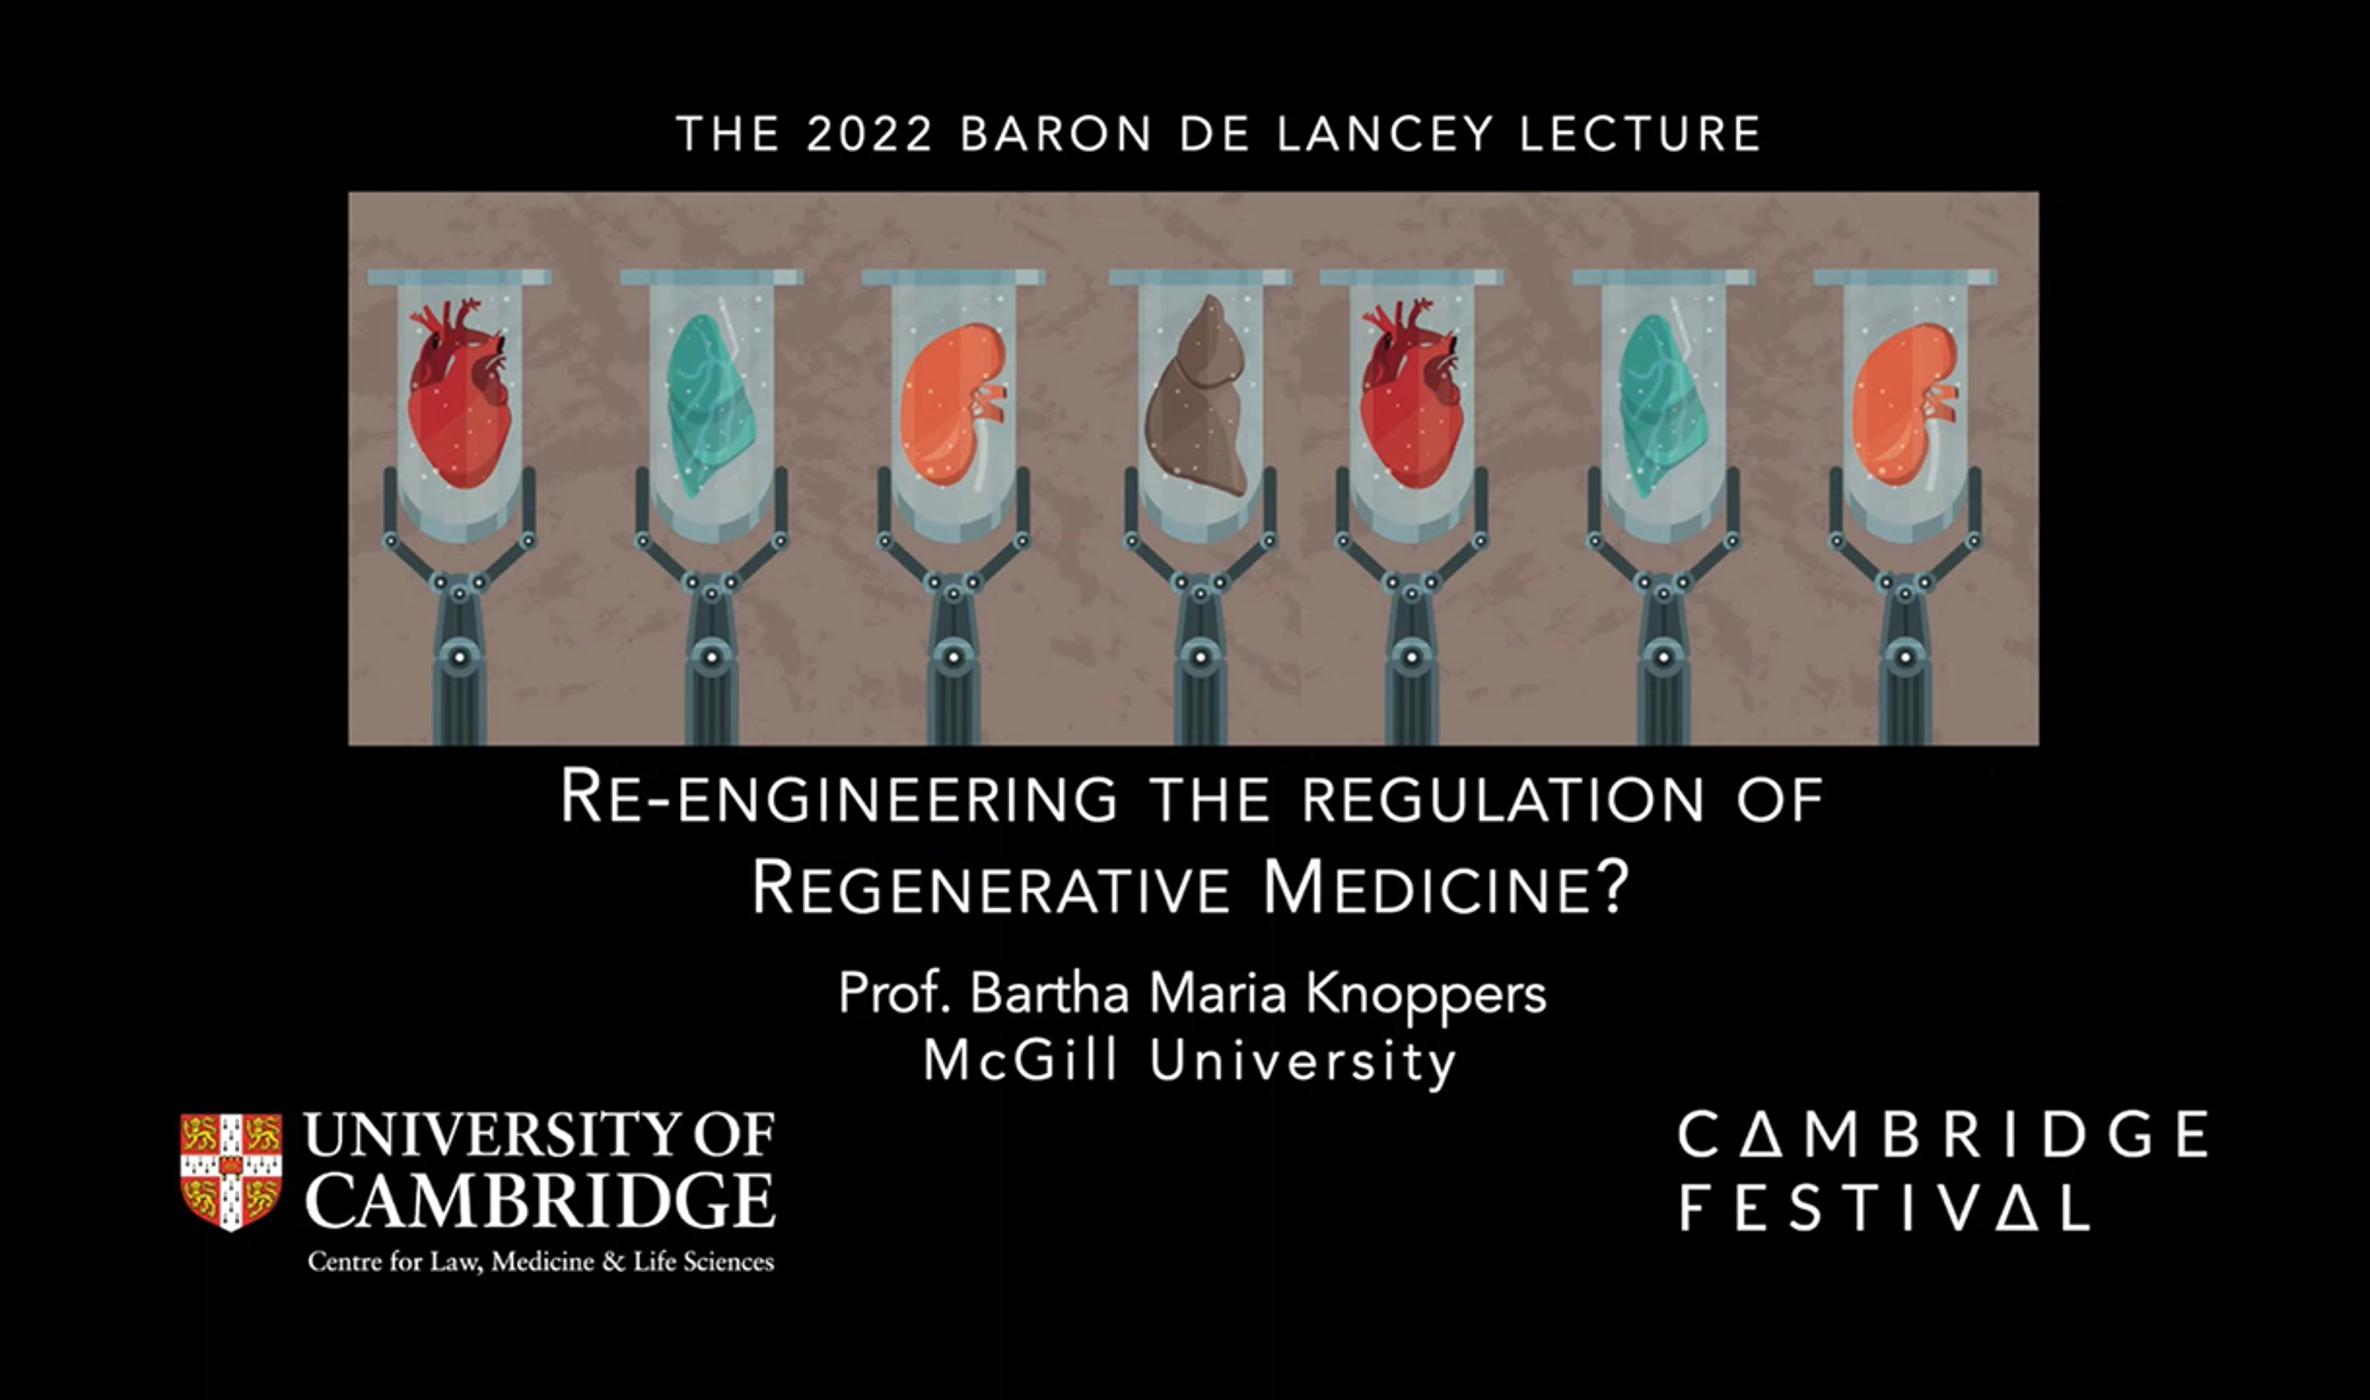 ’Re-engineering the Regulation of Regenerative Medicine?’: The 2022 Baron de Lancey Lecture